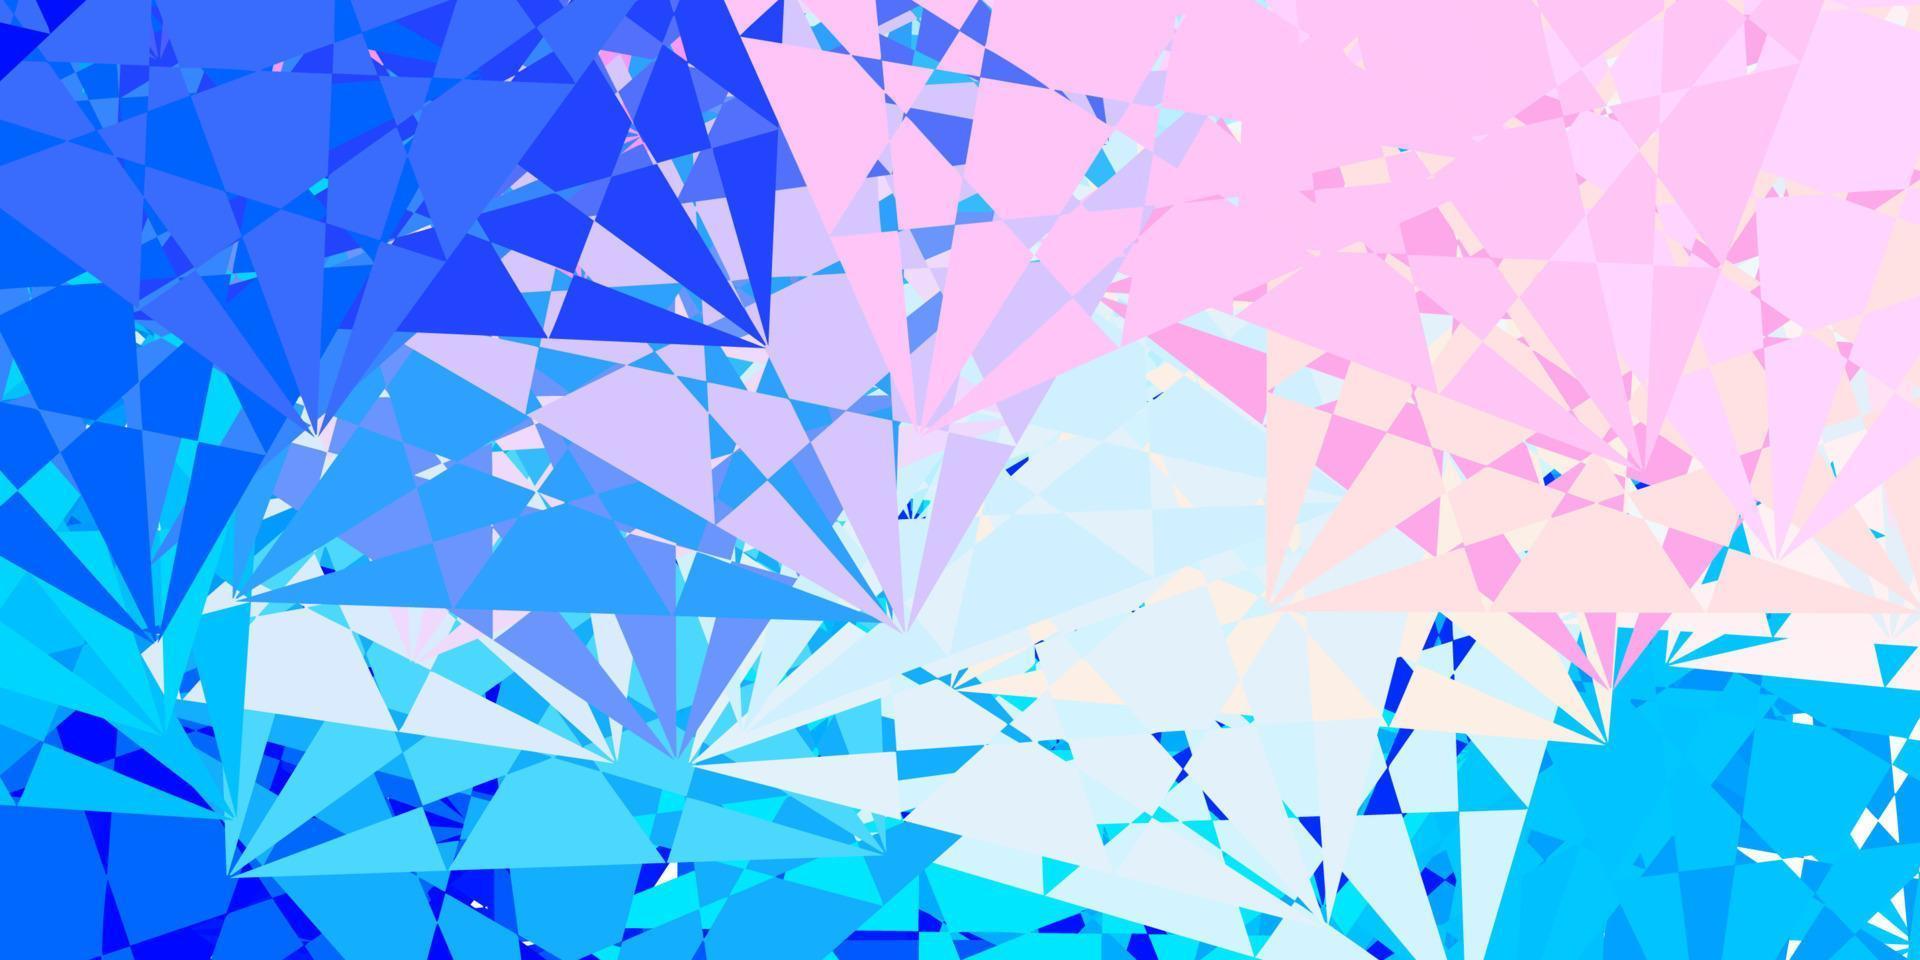 hellrosa, blaue Vektorschablone mit Dreiecksformen. vektor